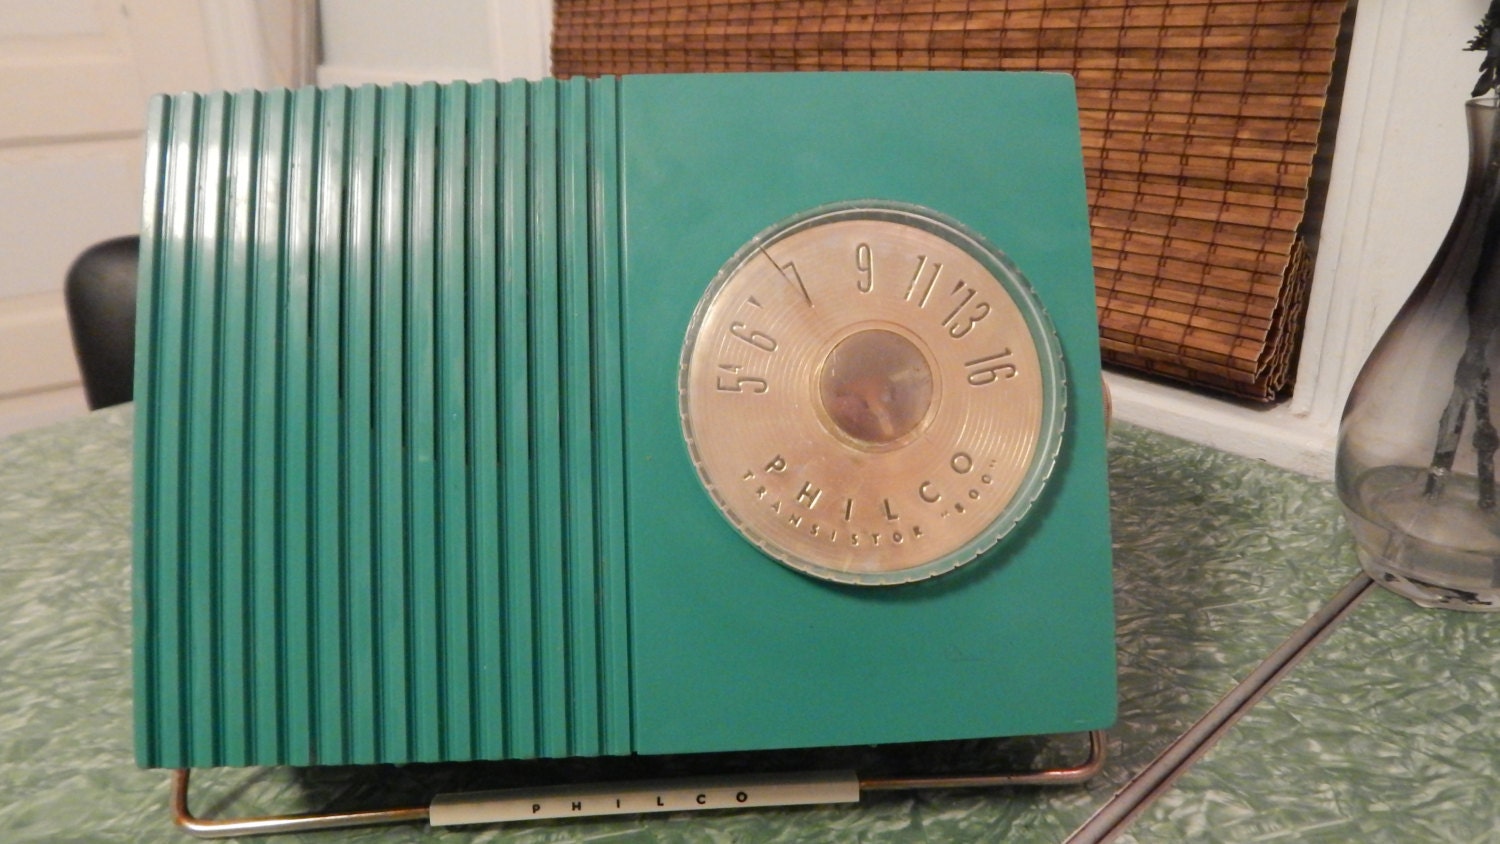 1950s transistor radio for sale